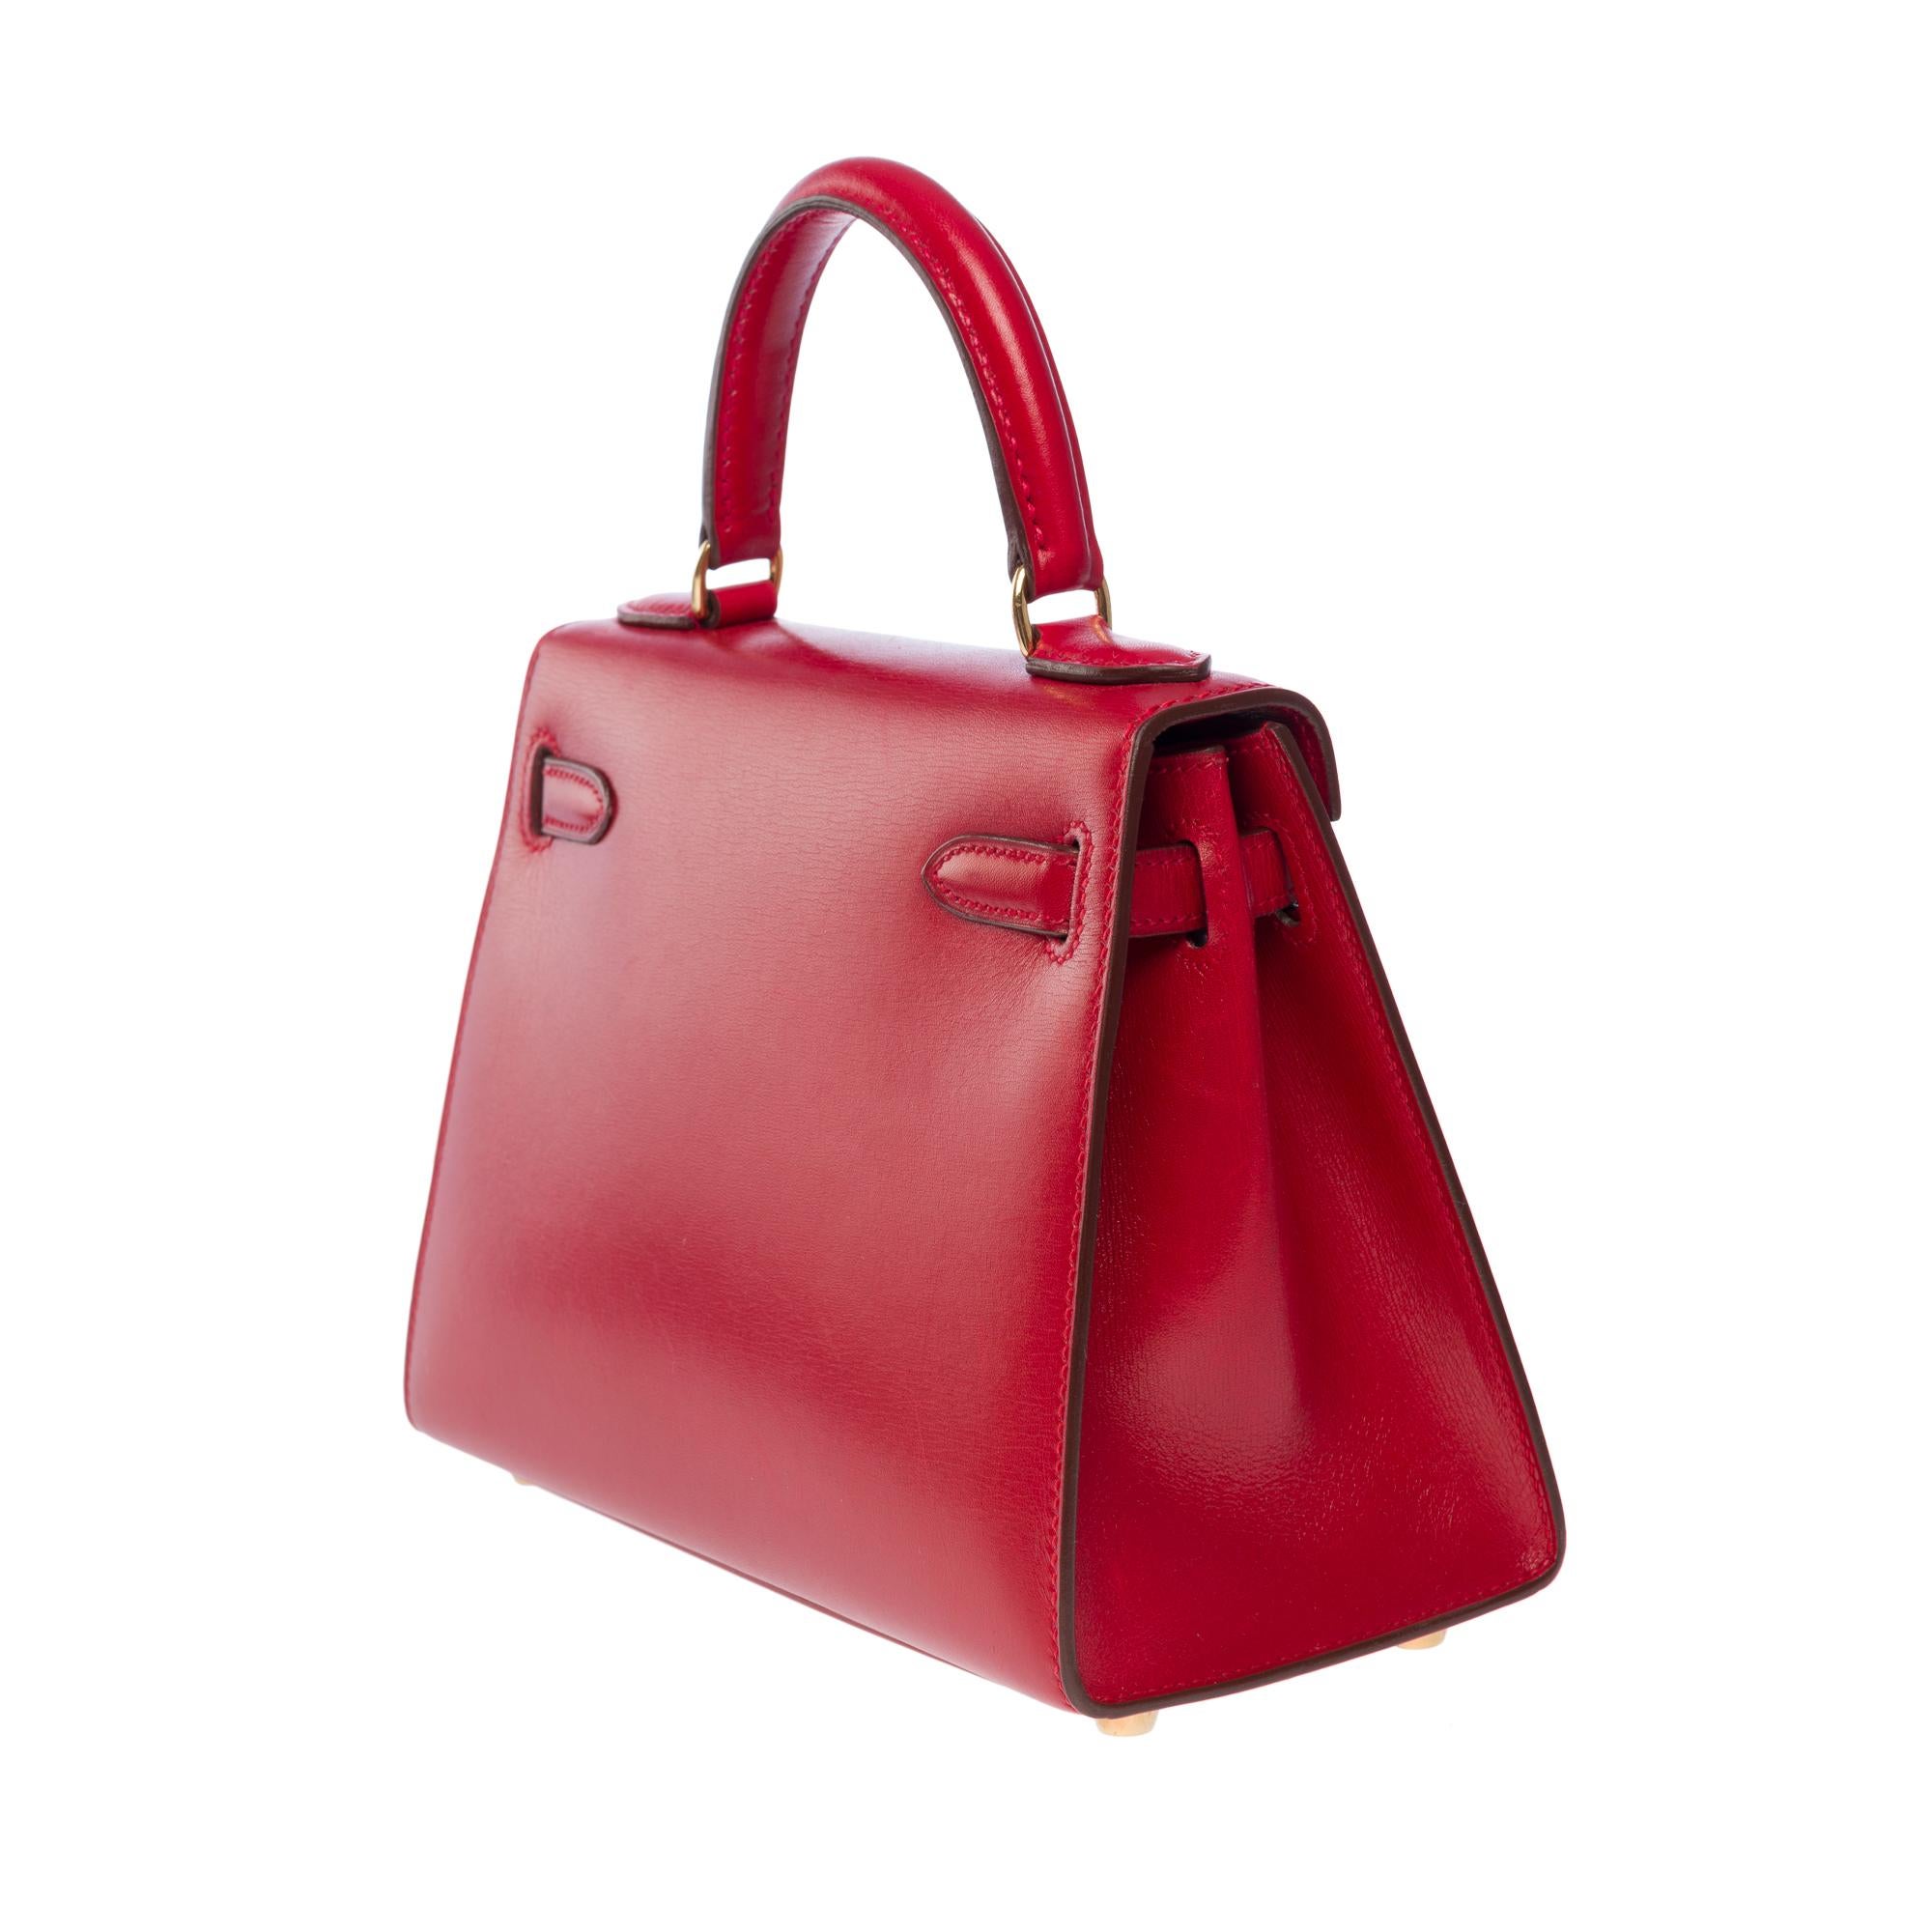 Rare Hermès Mini Kelly 20cm handbag double strap in Red H box calfskin, GHW For Sale 2